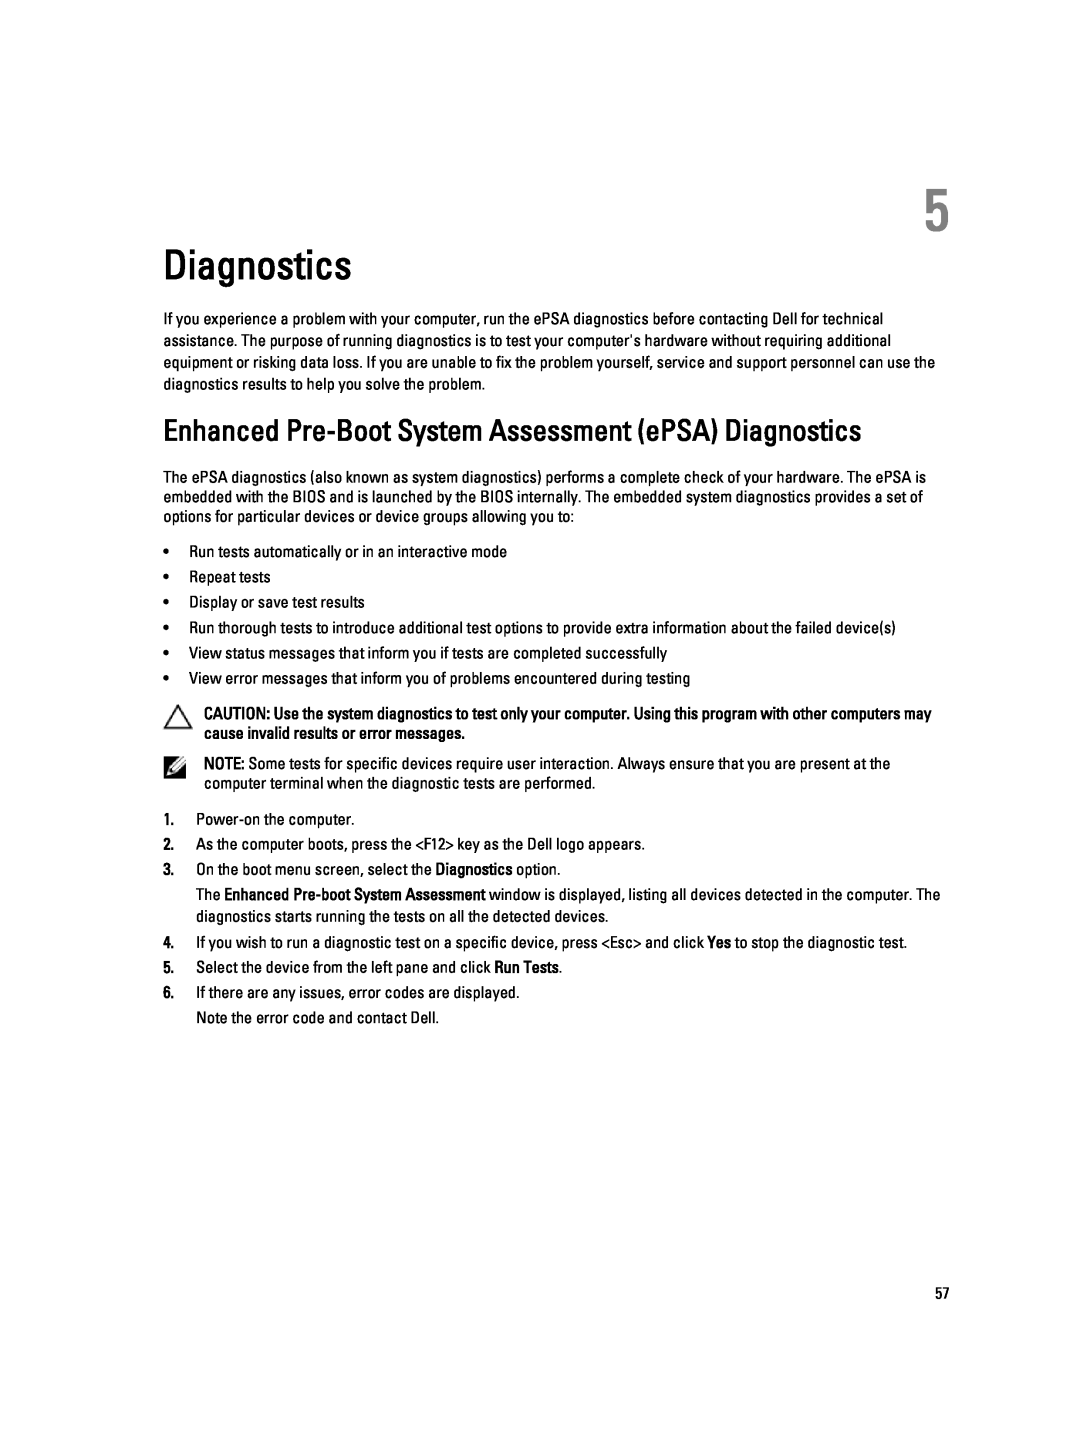 Dell T5610 owner manual Enhanced Pre-Boot System Assessment ePSA Diagnostics 